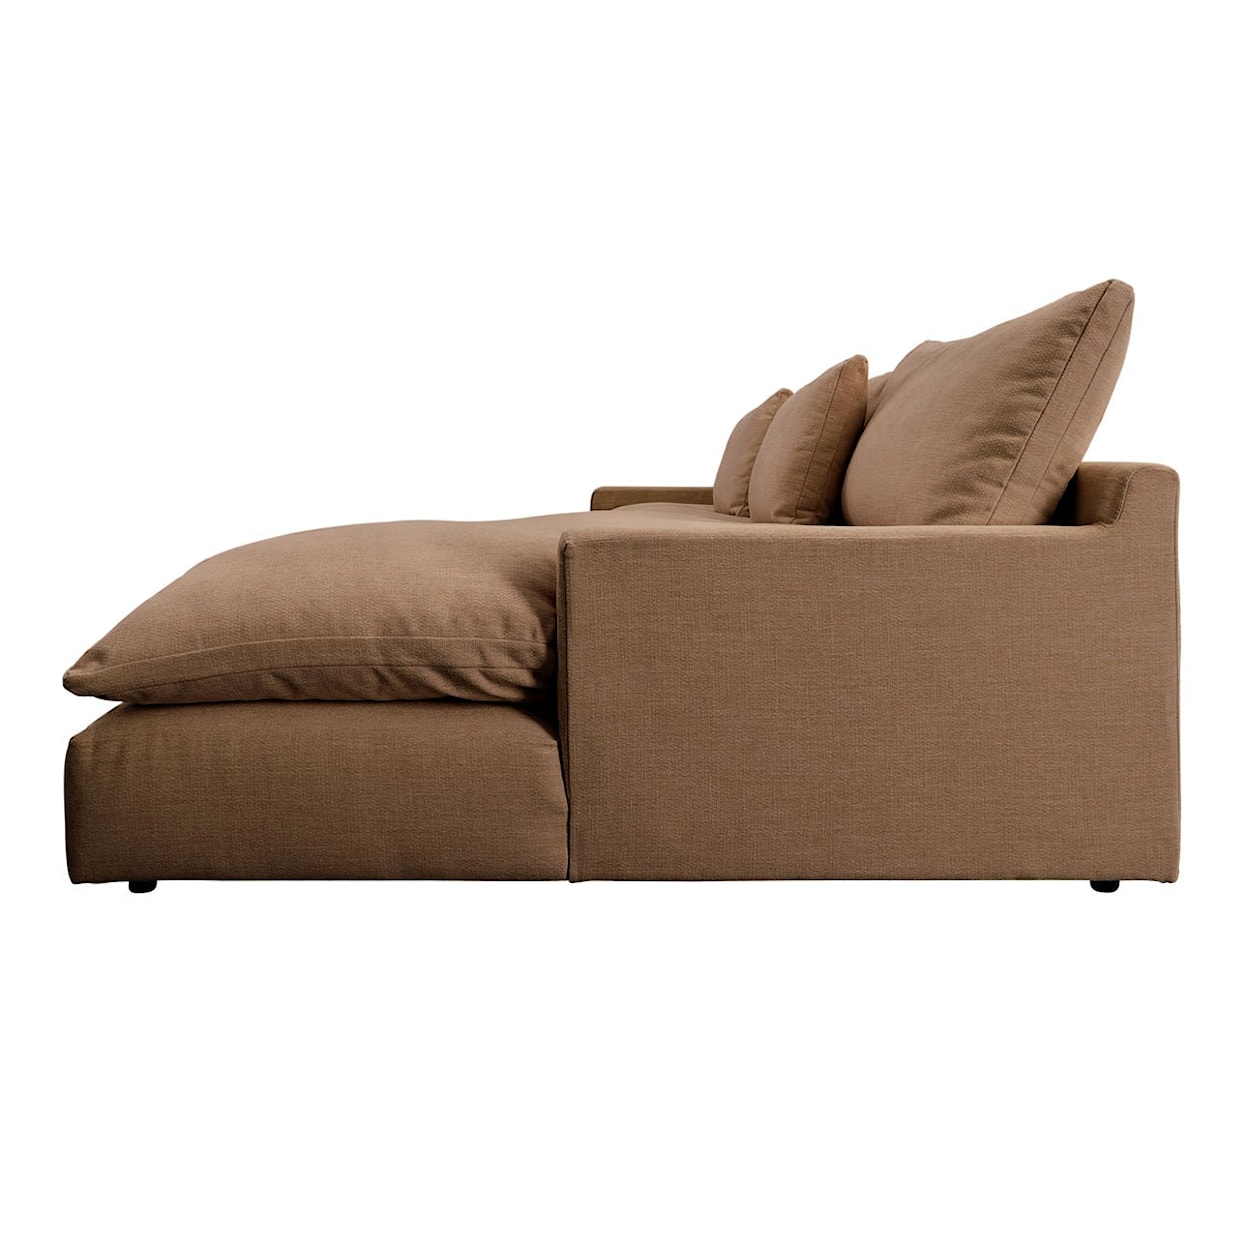 Dovetail Furniture Antonio Sectional Sofa